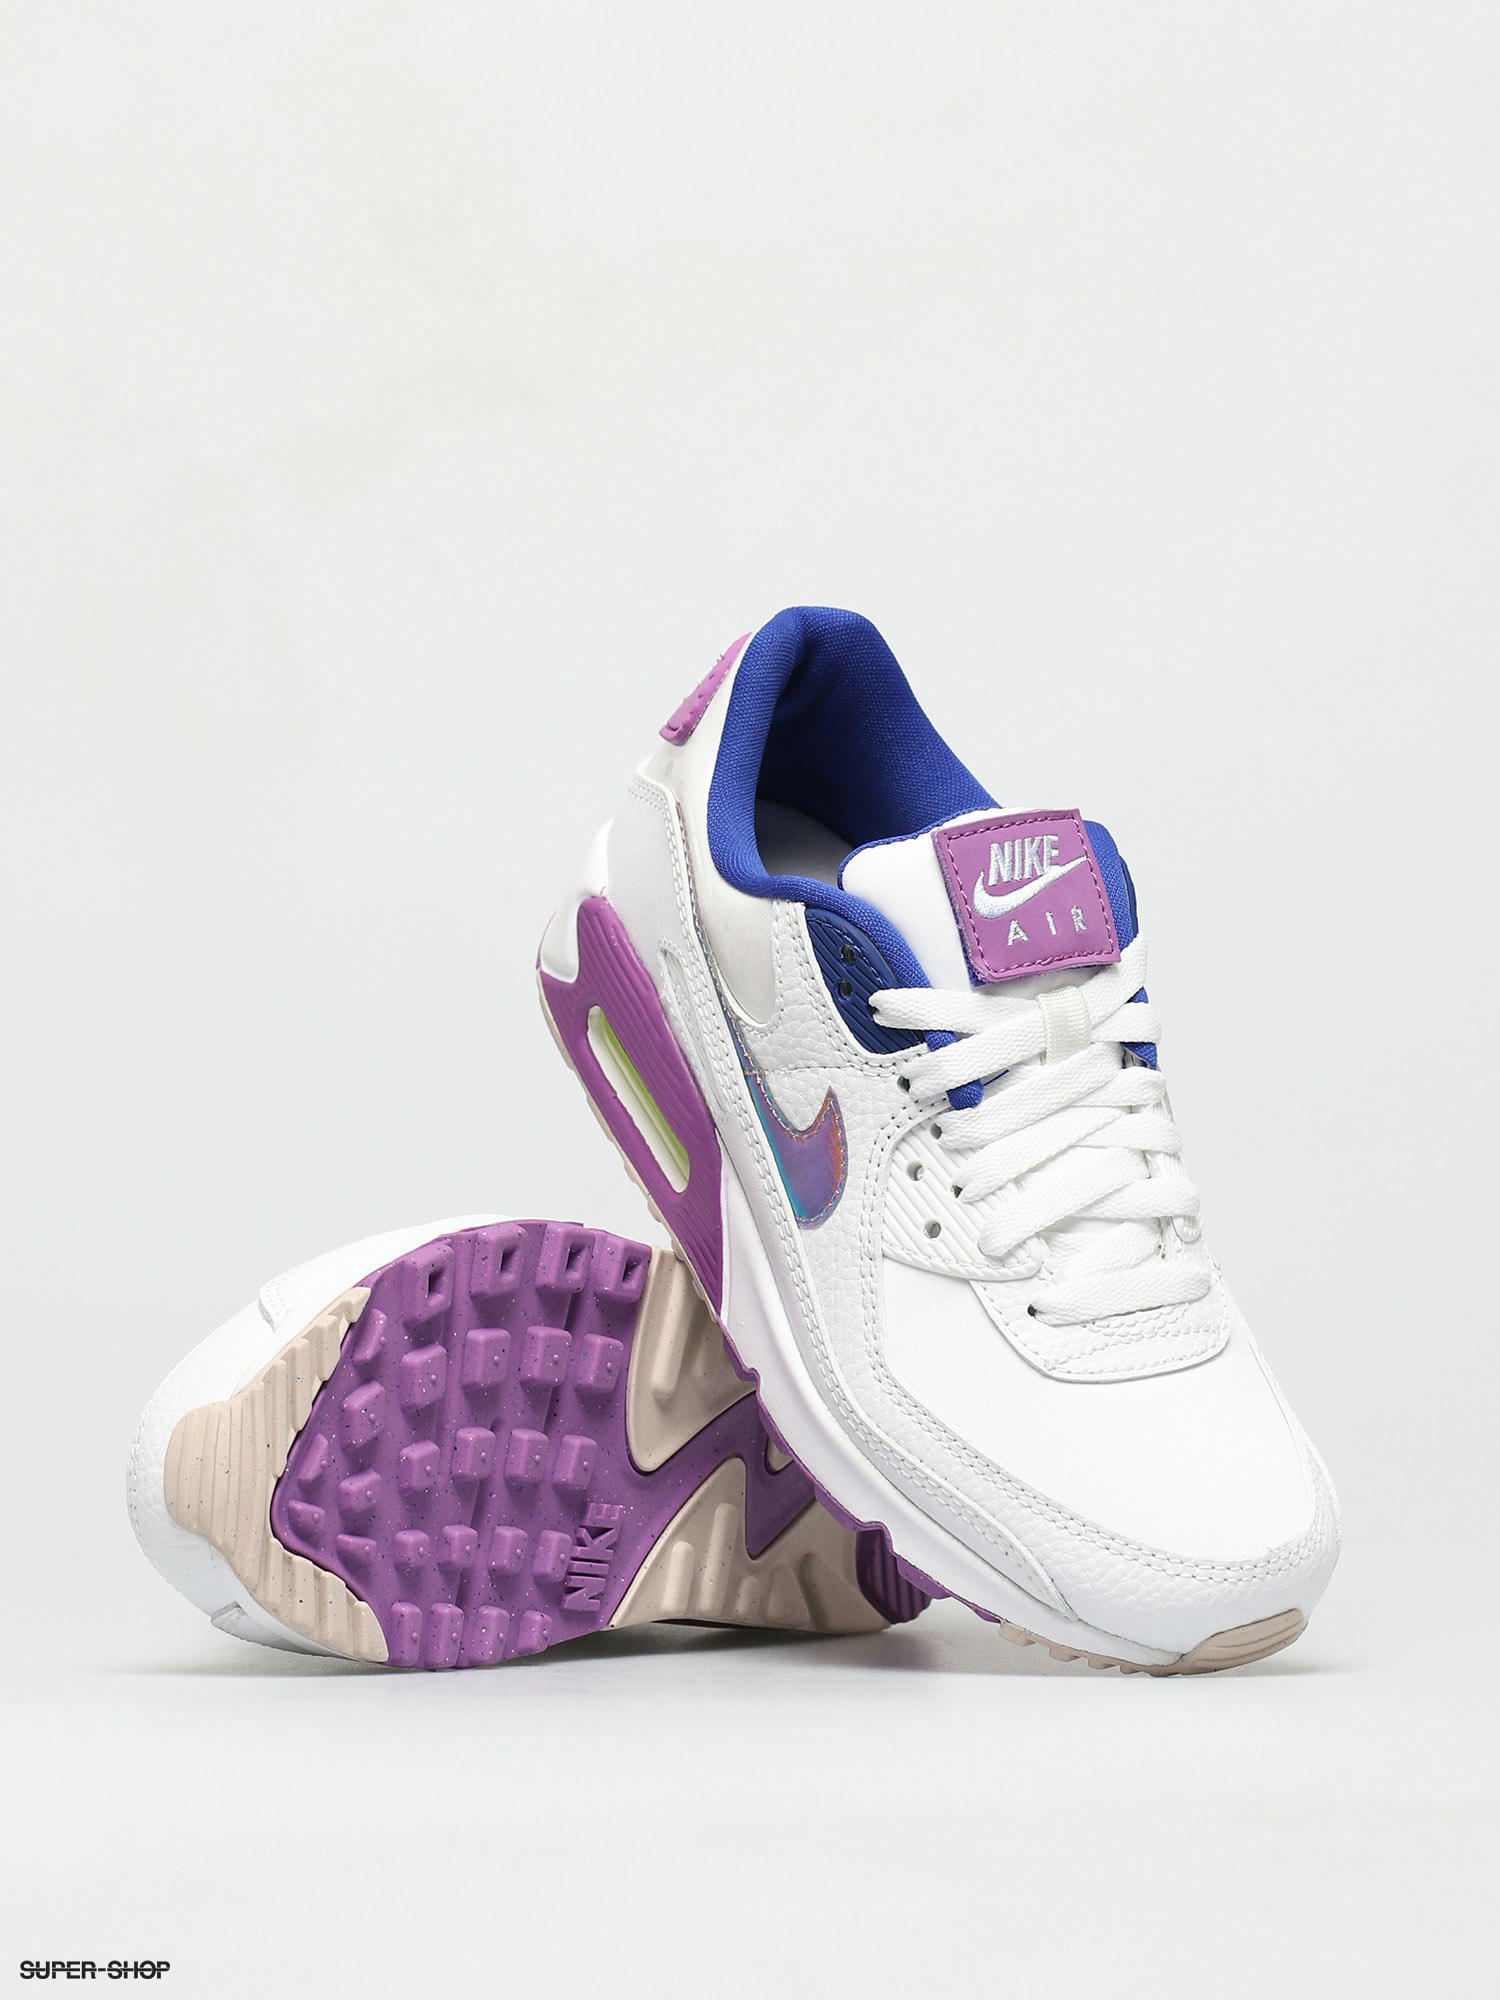 nike air max 90 purple and white